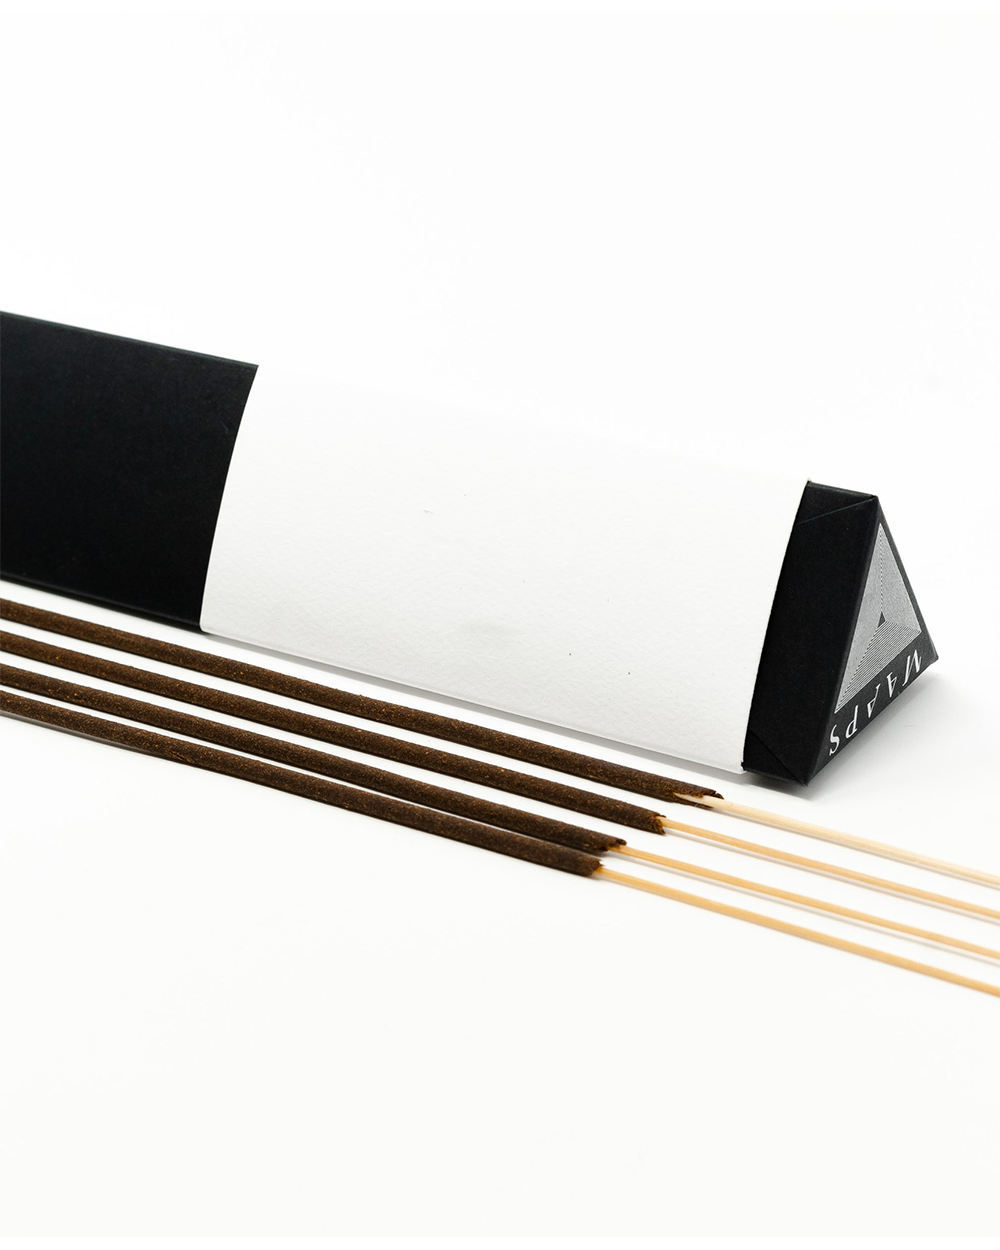 RIFT Incense Sticks - 15 Sticks